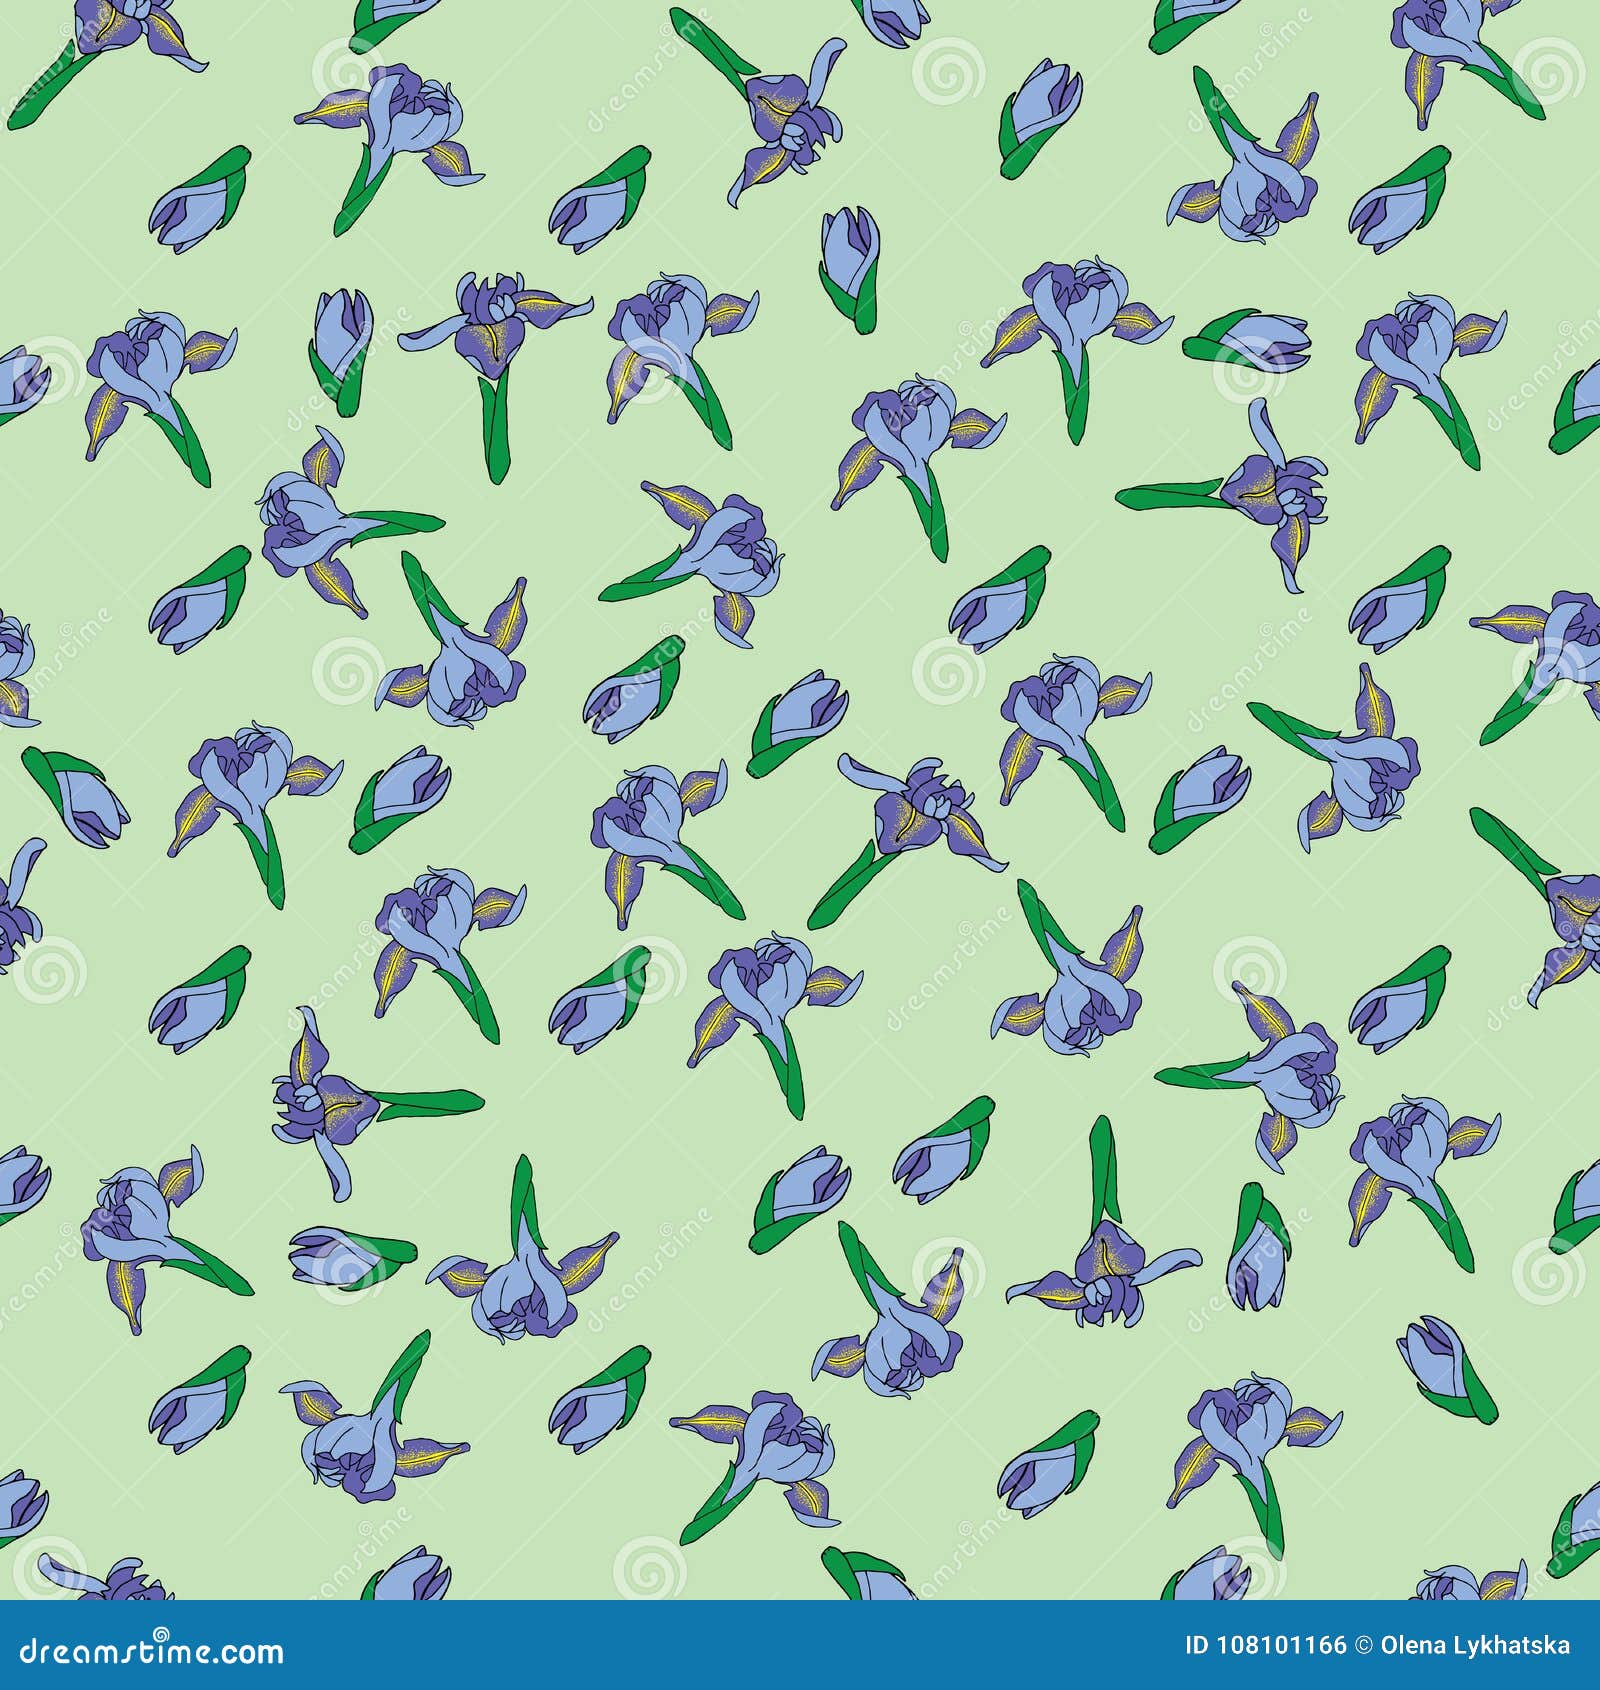 blueflag iris hand drawn pattern on green